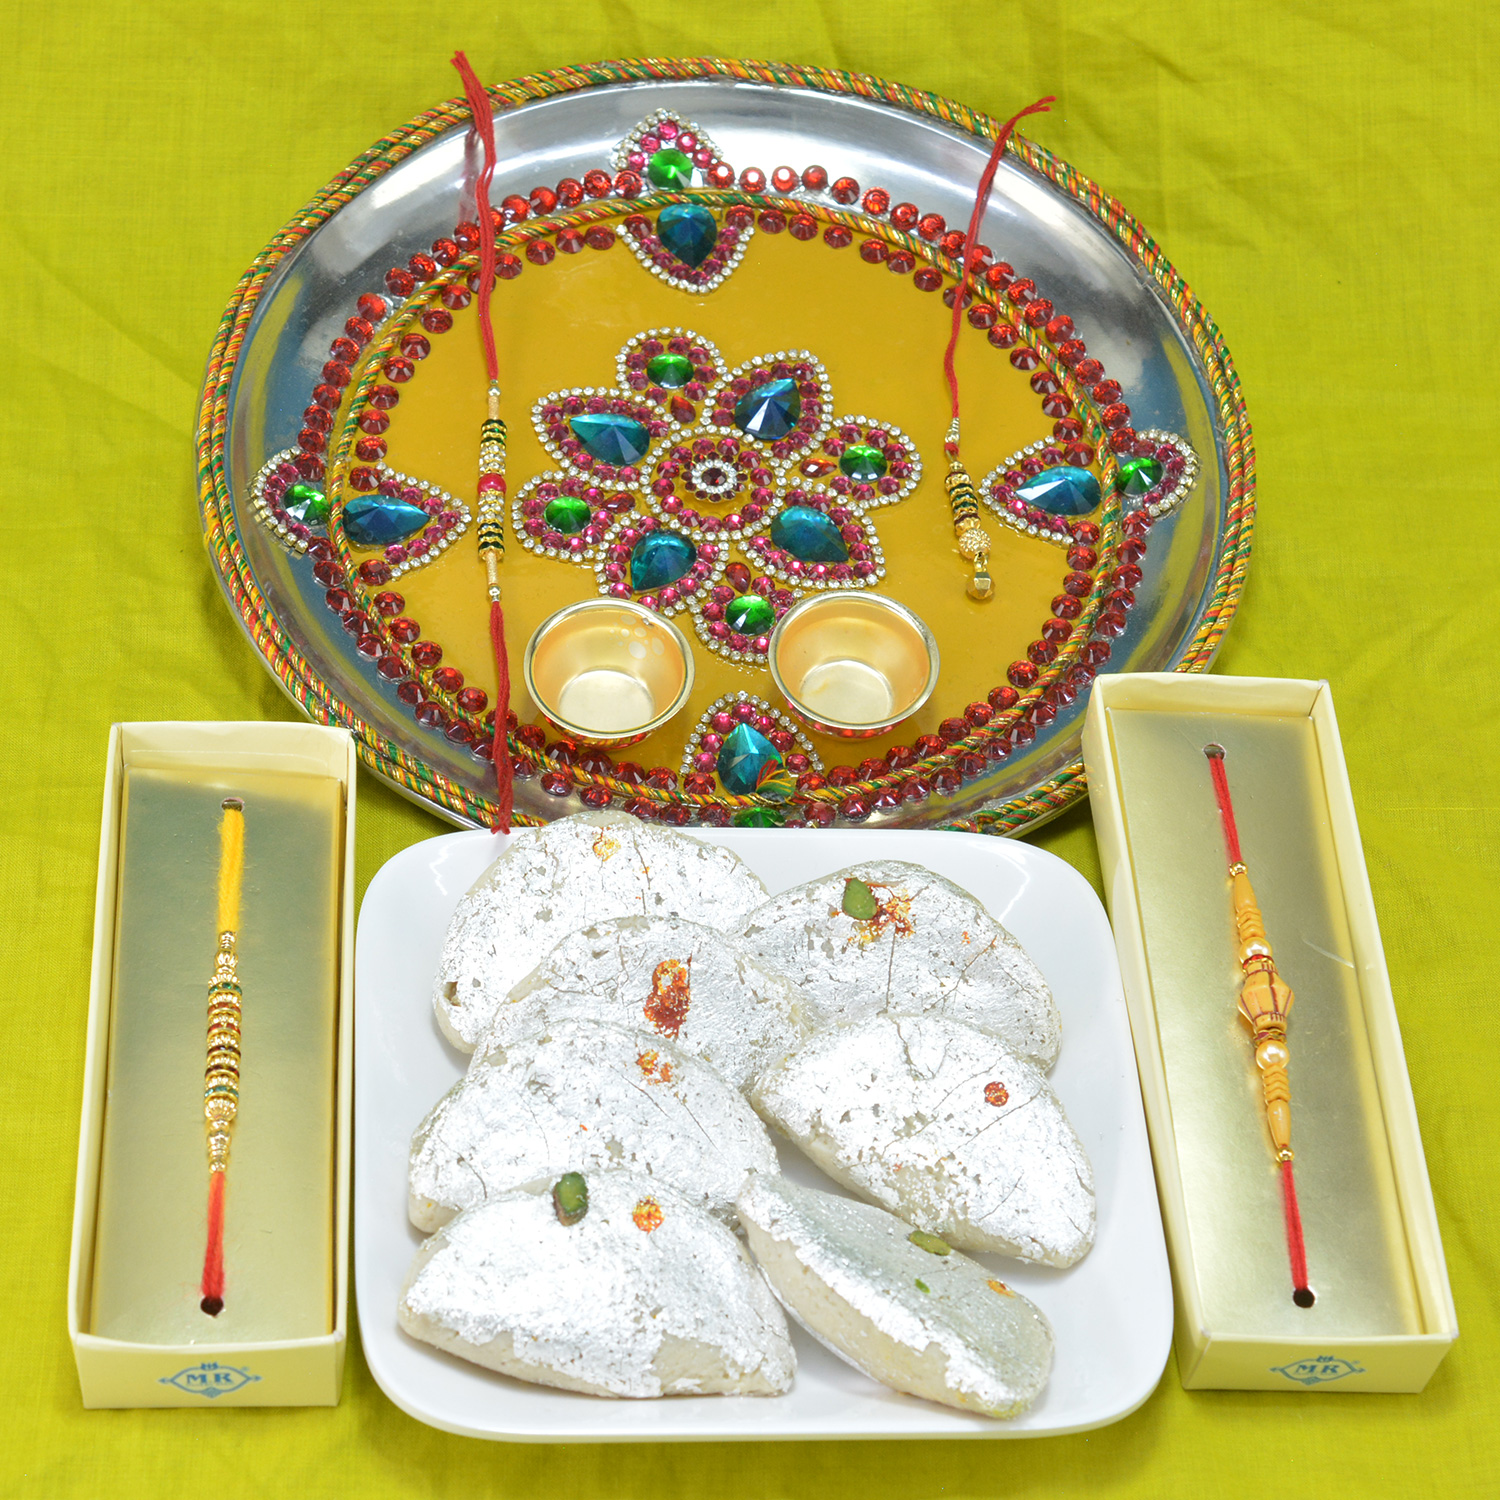 Gorgeous Crafted Pooja Thali along with Savory Kaju Gujia and Rakhi Hamper